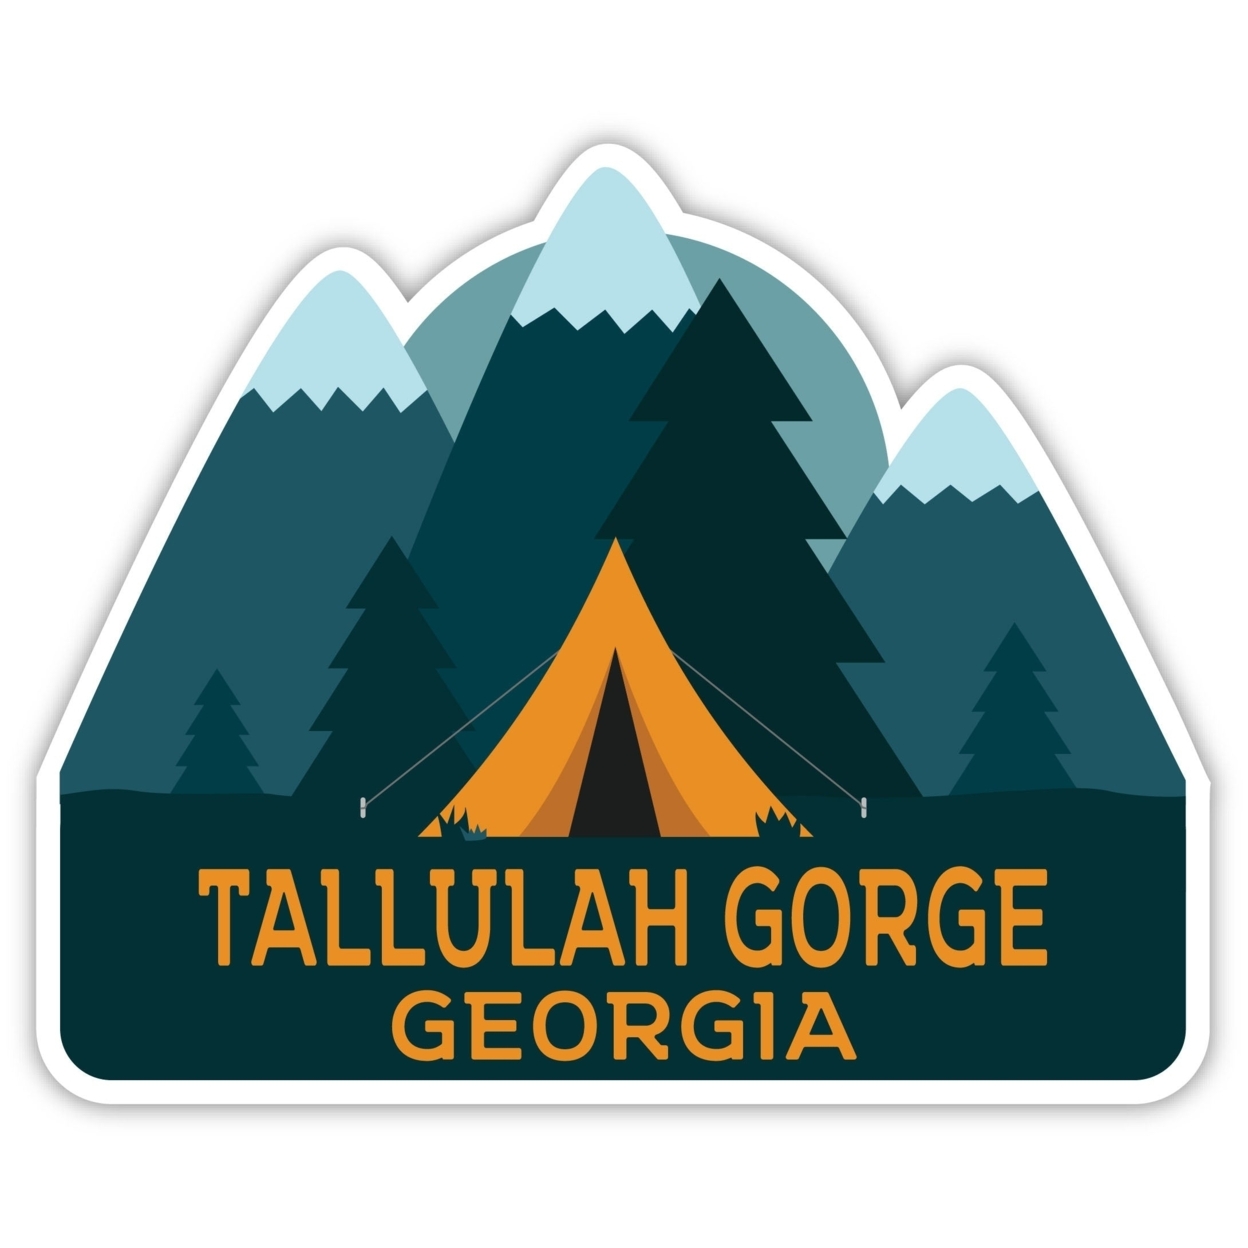 Tallulah Gorge Georgia Souvenir Decorative Stickers (Choose Theme And Size) - Single Unit, 4-Inch, Tent